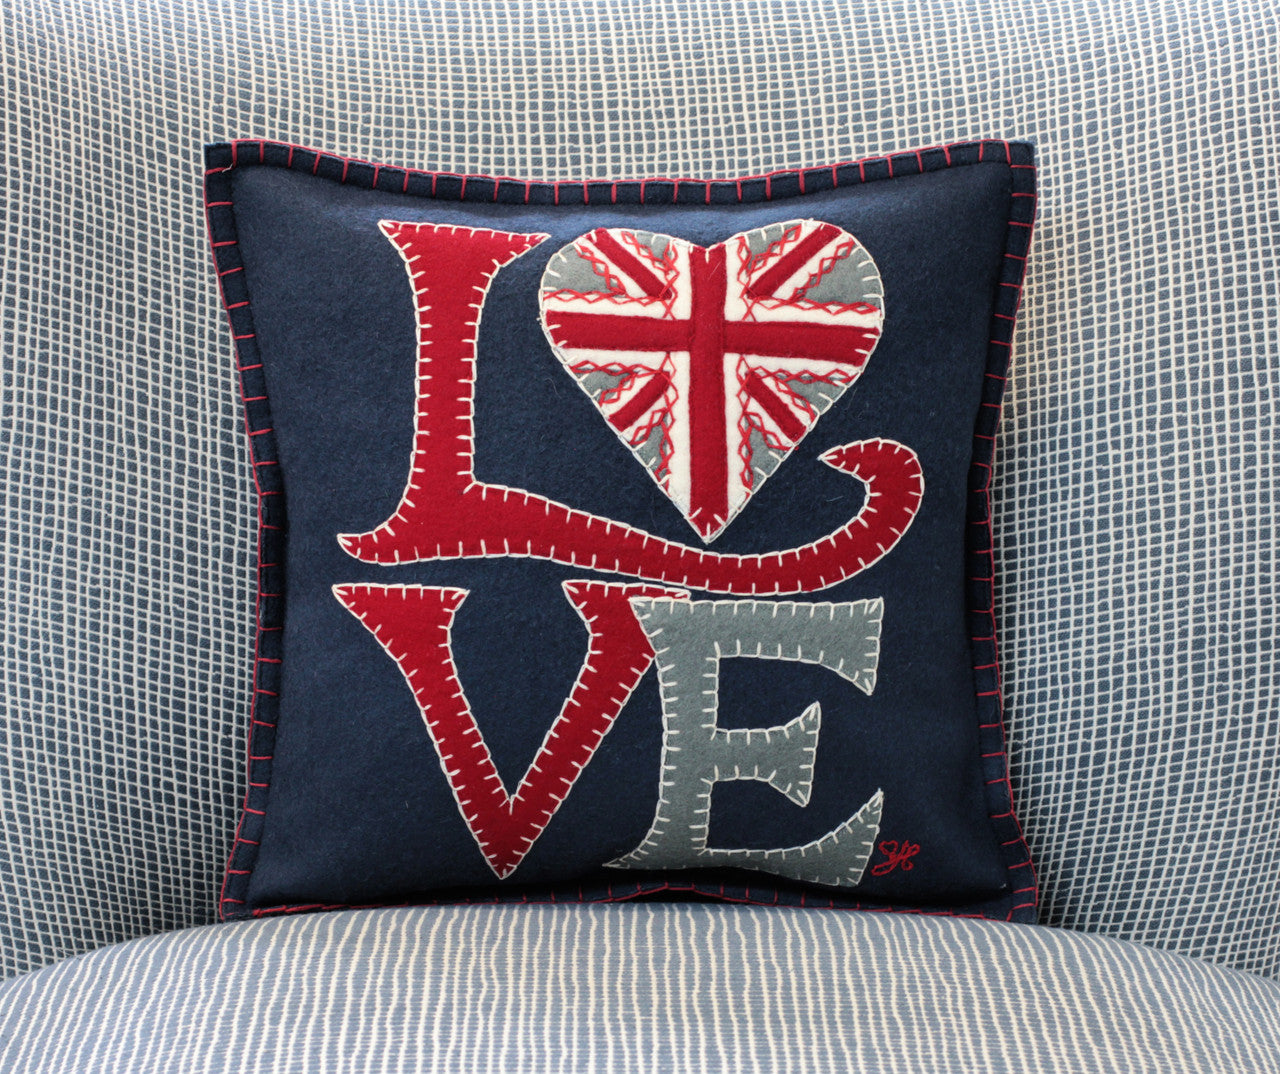 Hand embroidered Union Jack Heart pillow from British designer Jan Constantine.